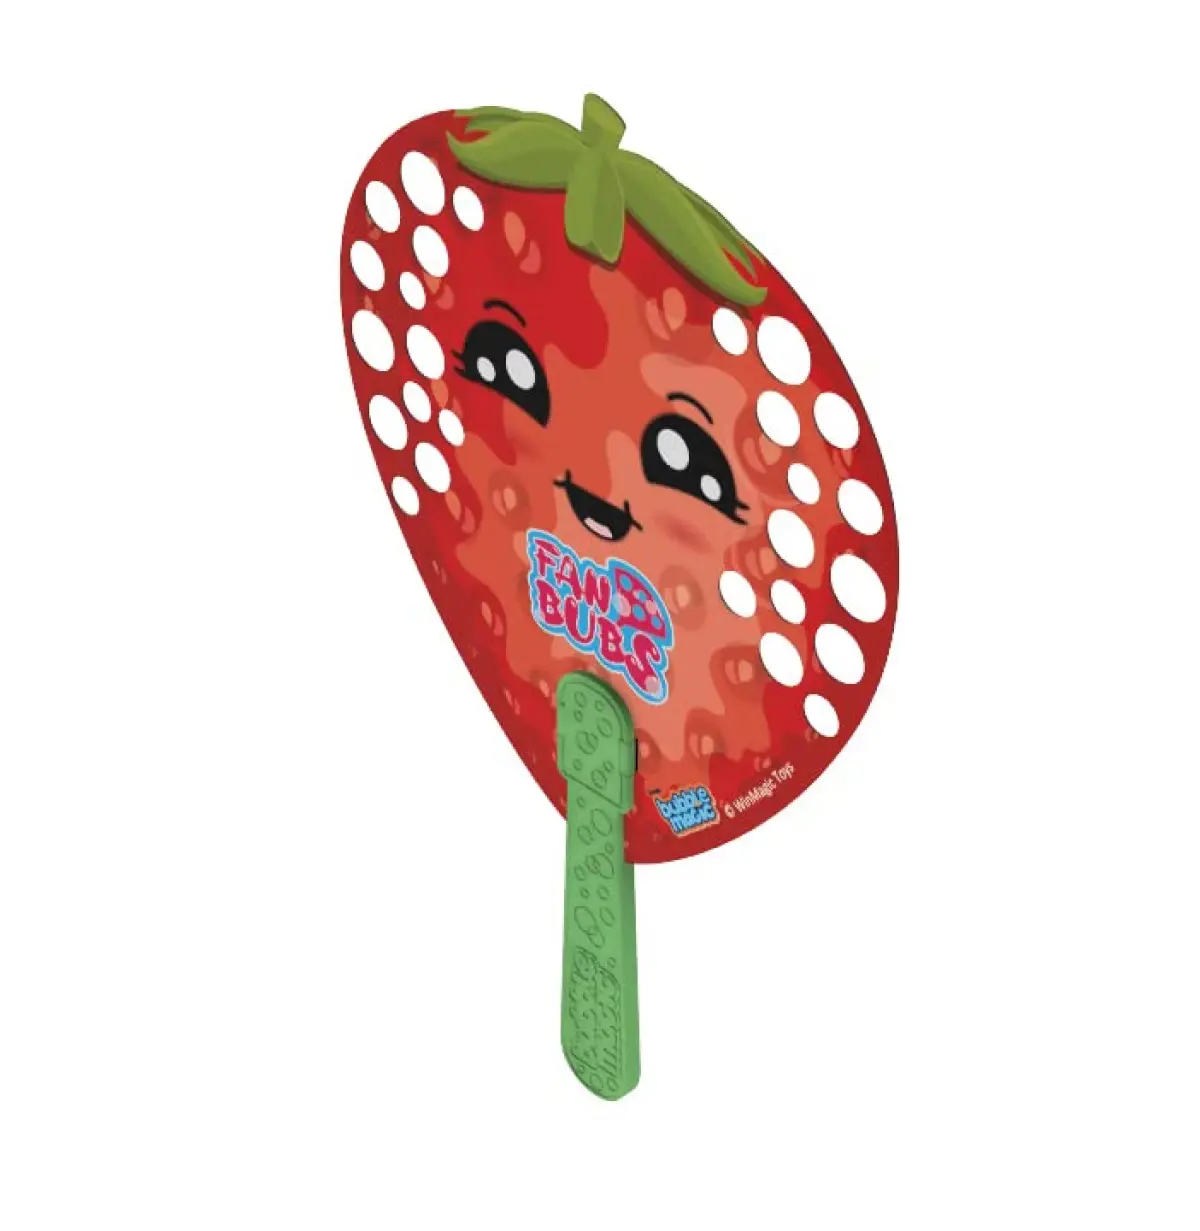 Bubble Magic Fan Bubs Strawberry Bubble Solution For Kids of Age 3Y+, Multicolour